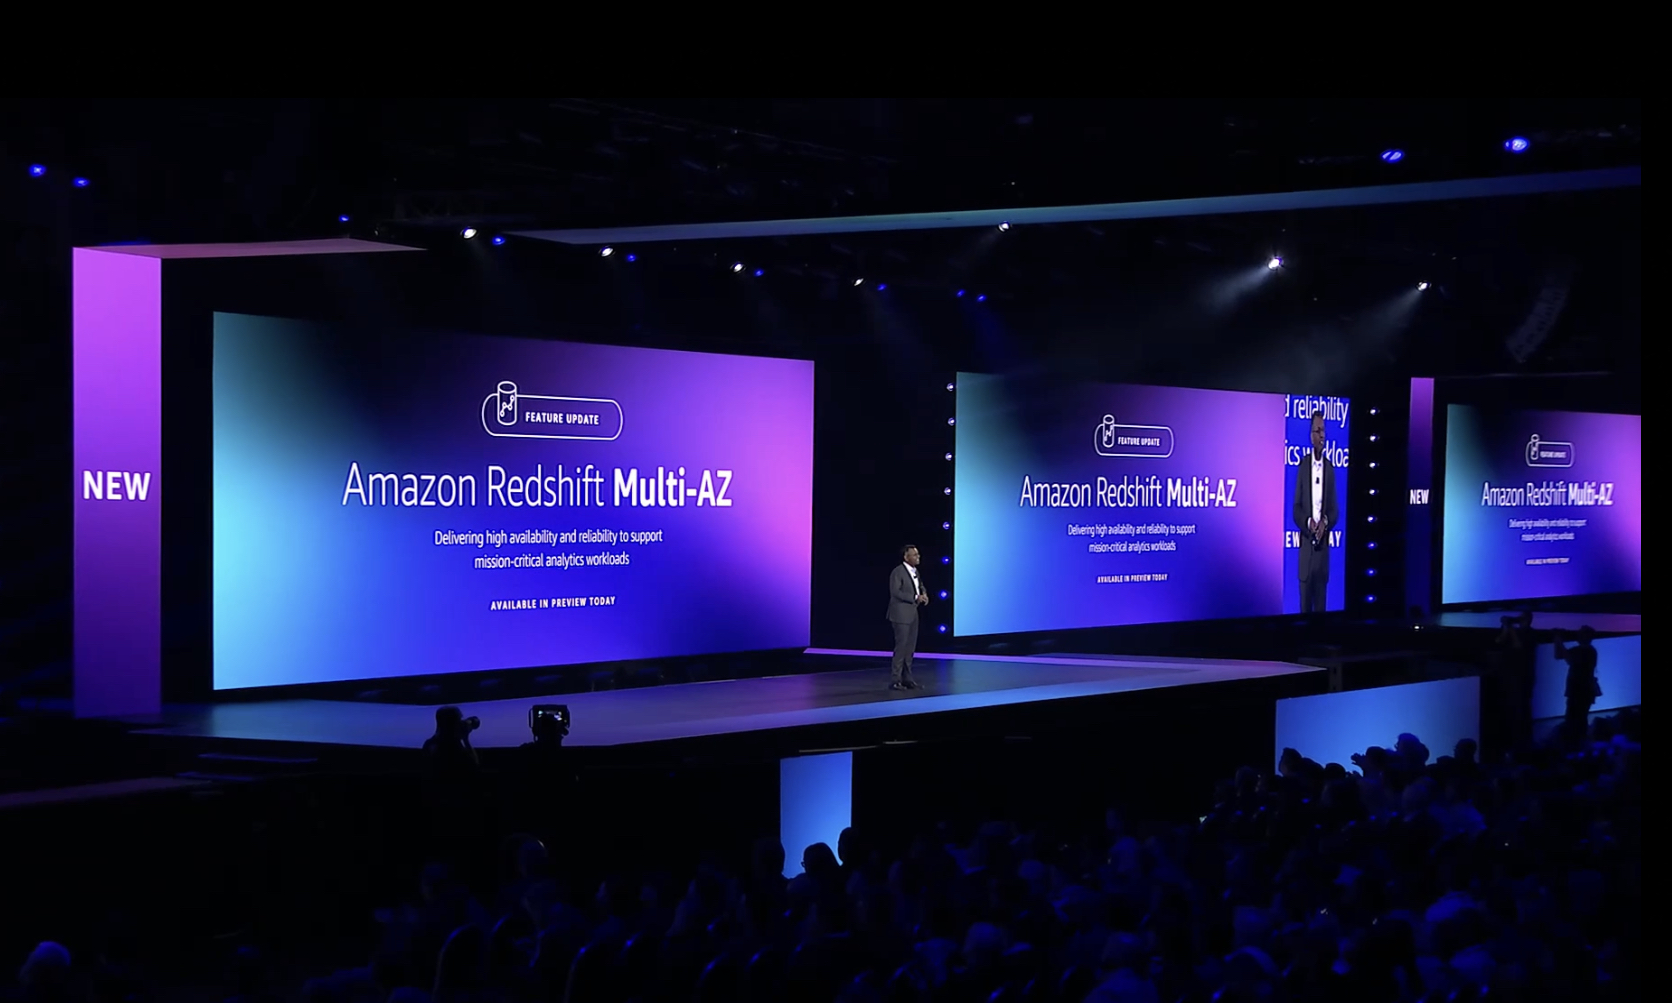 Amazon Redshift Multi-AZ